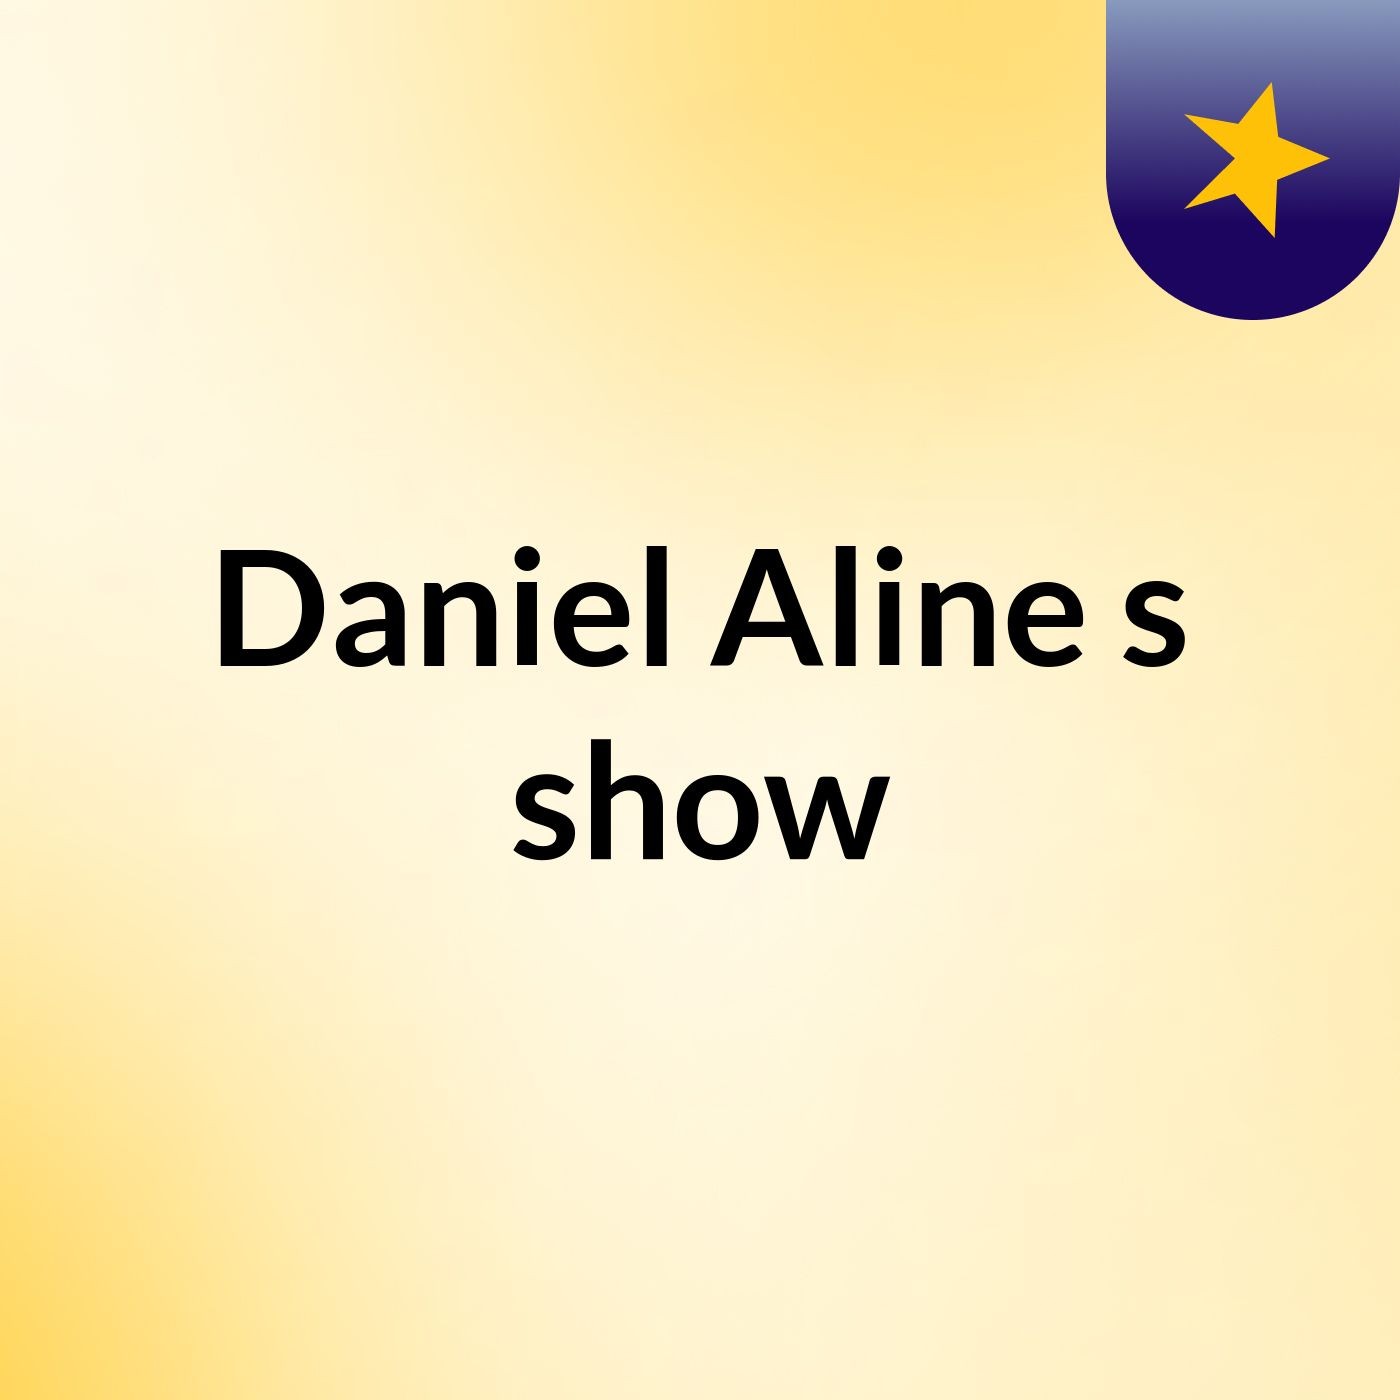 Daniel Aline's show